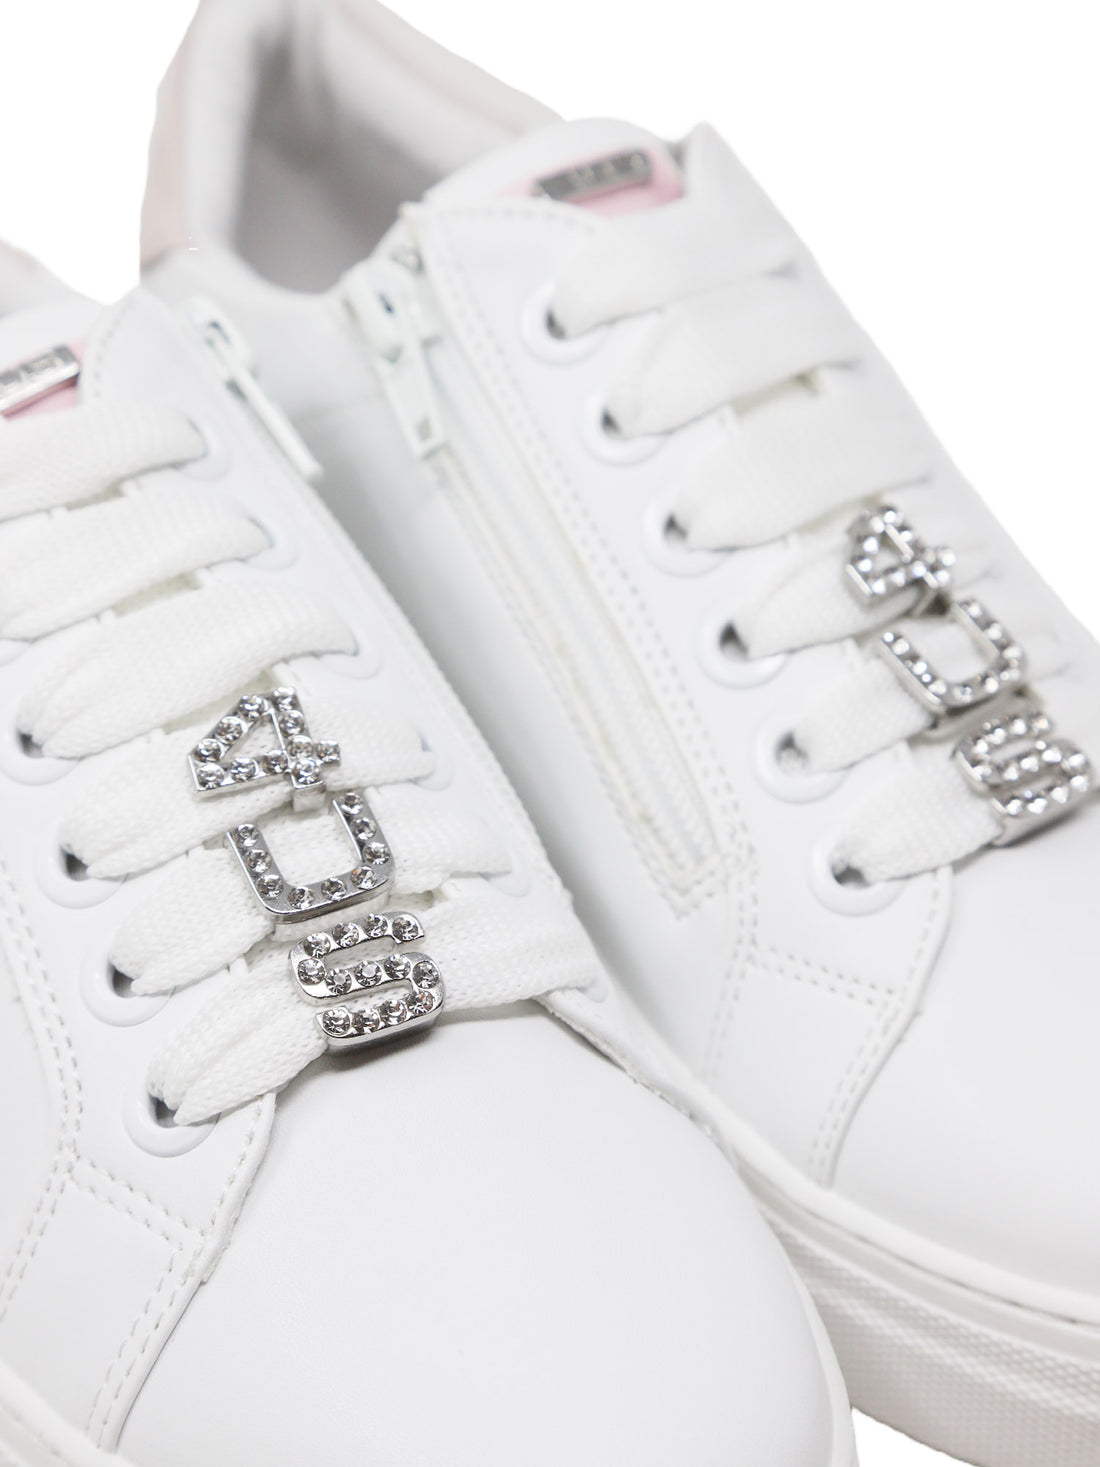 Sneakers Bianco Rosa 4us